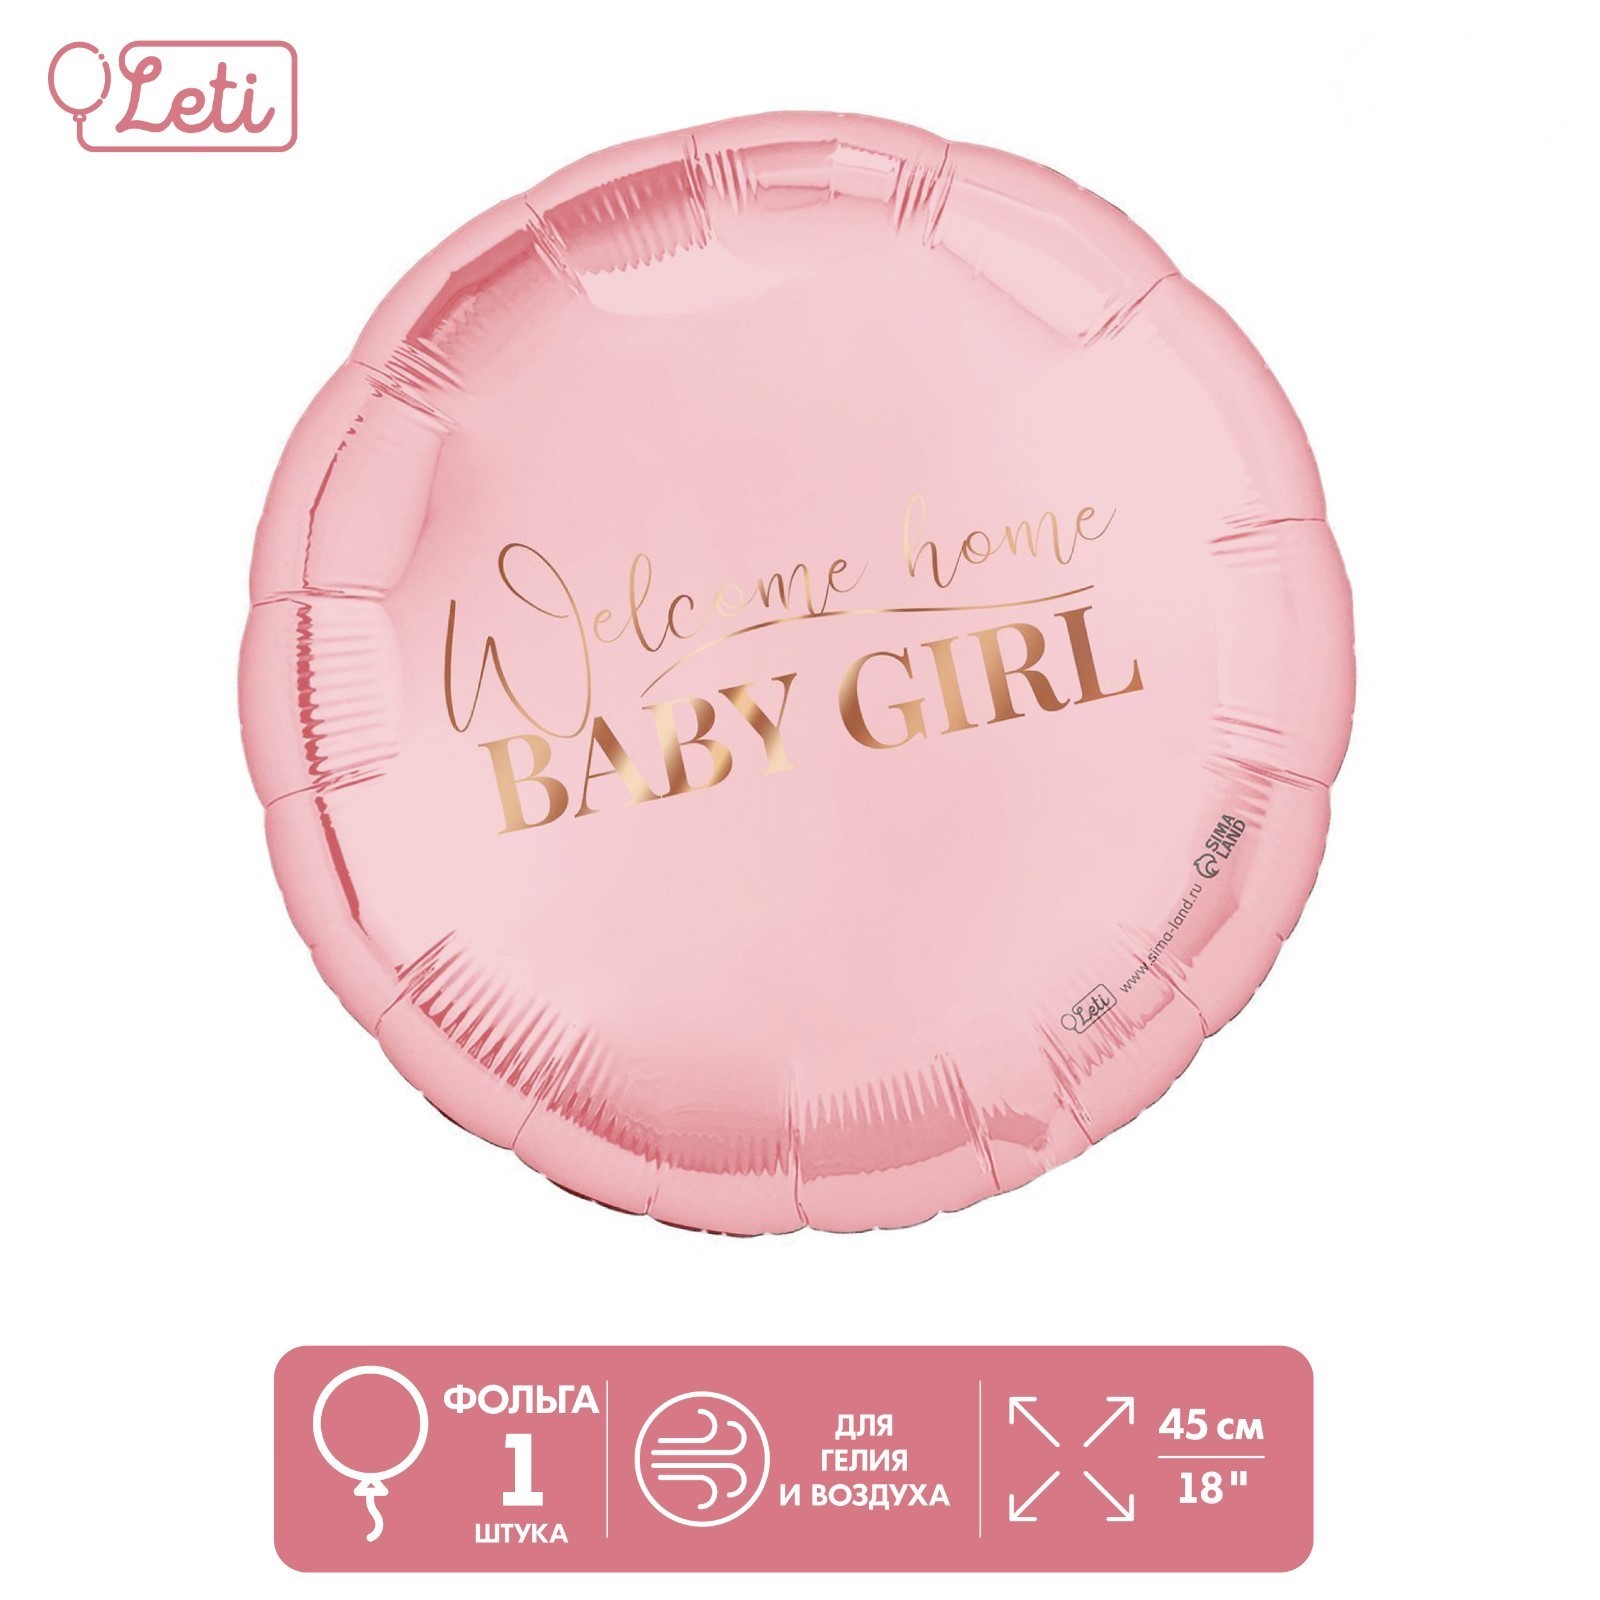 Шар фольгированный Leti Baby girl 9939363, диаметр 45 см, розовый veld co фотоальбом анкета baby girl лошадка